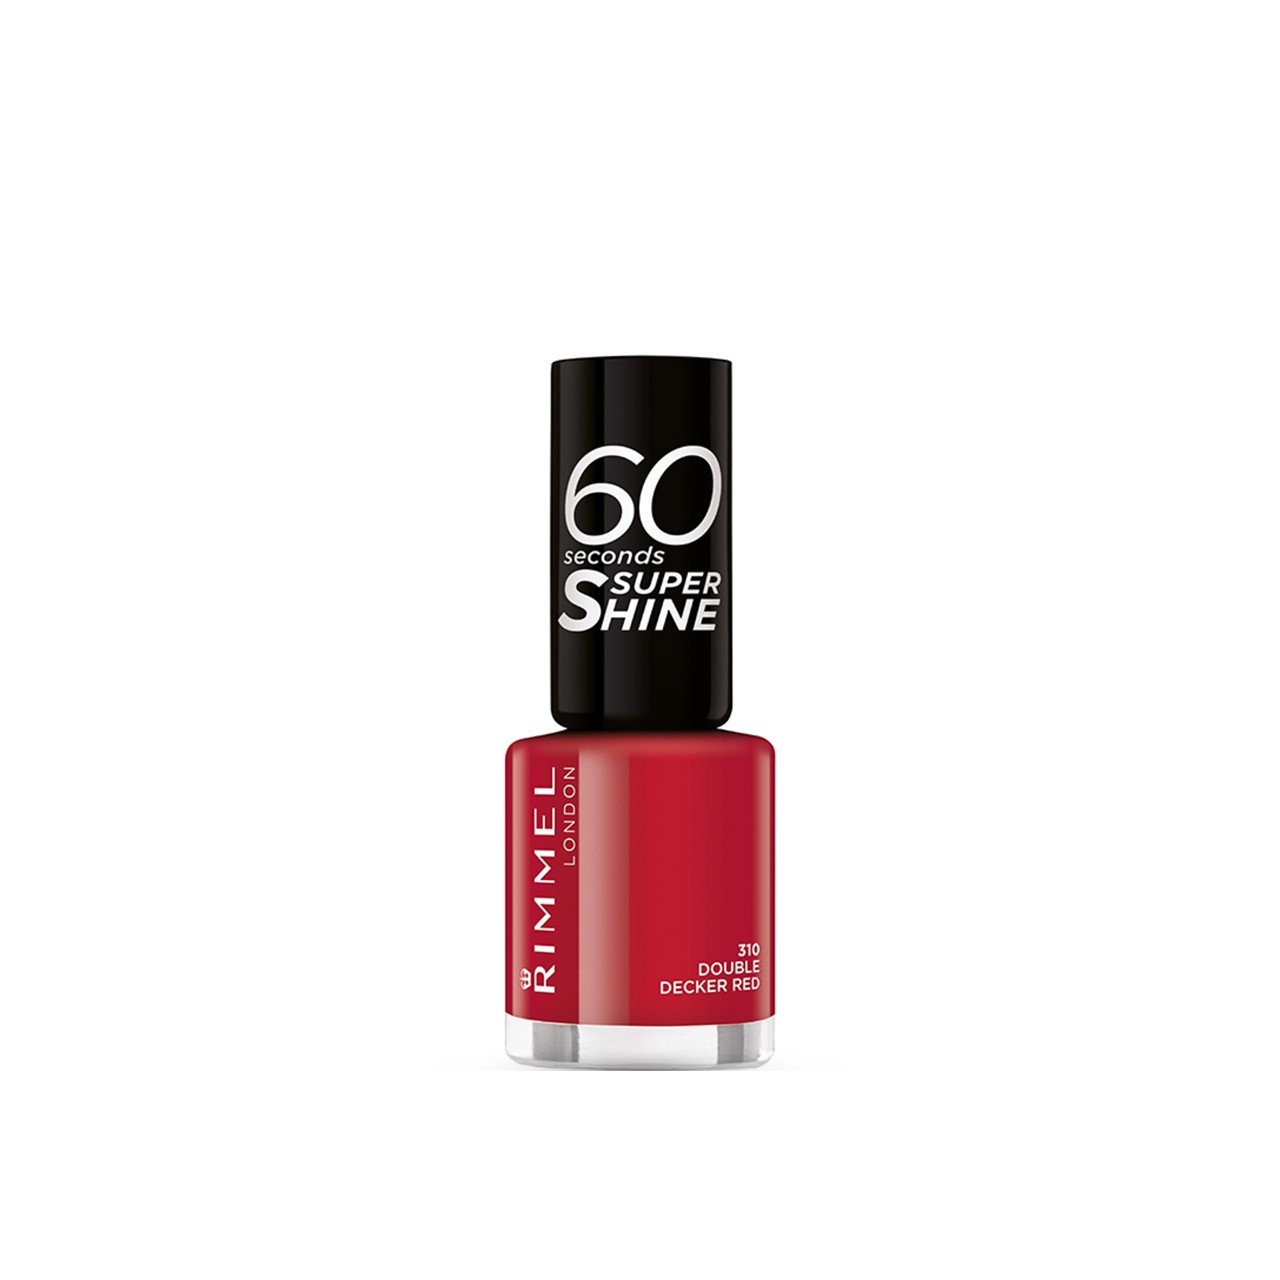 Rimmel London 60 Seconds Super Shine Nail Polish 310 8ml (0.27fl oz)